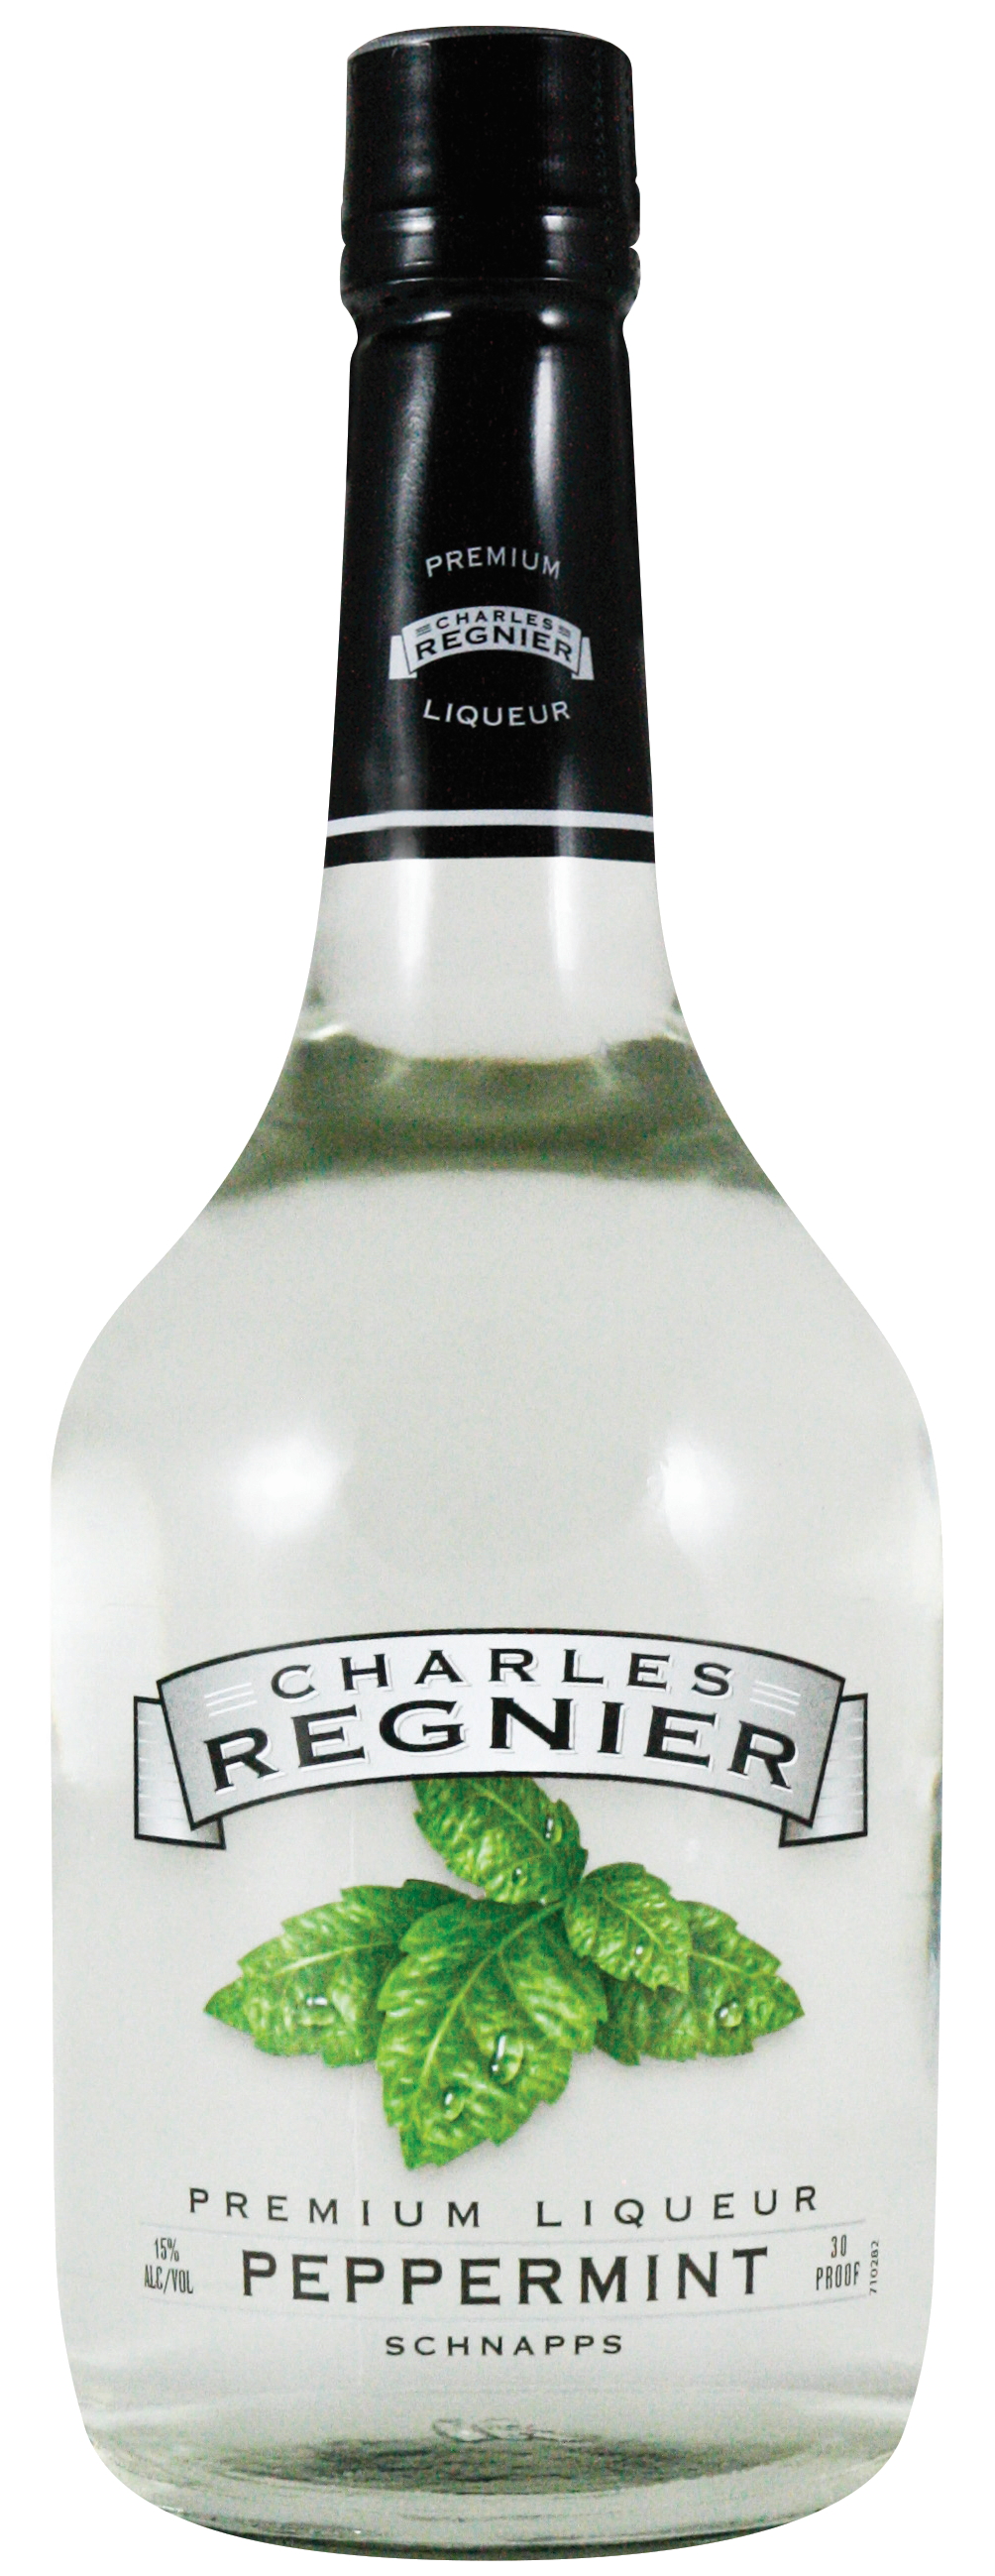 Charles Regnier Triple Sec - Bottles and Cases